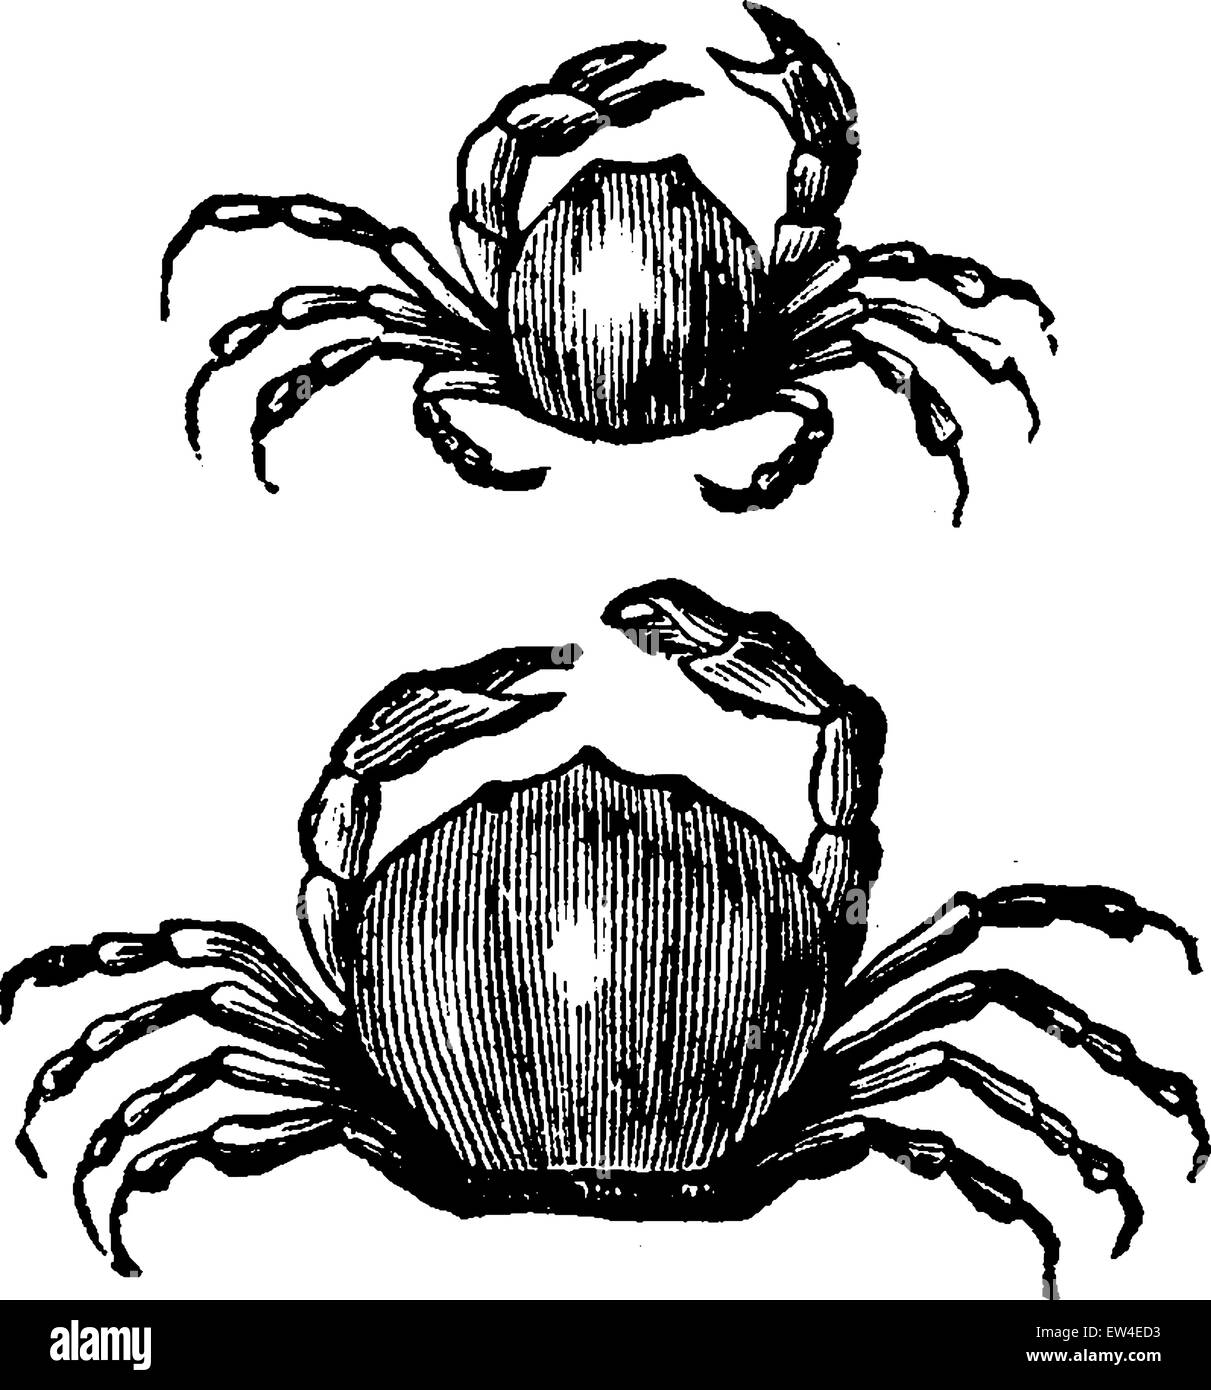 Pea crab, vintage engraved illustration. La Vie dans la nature, 1890. Stock Vector